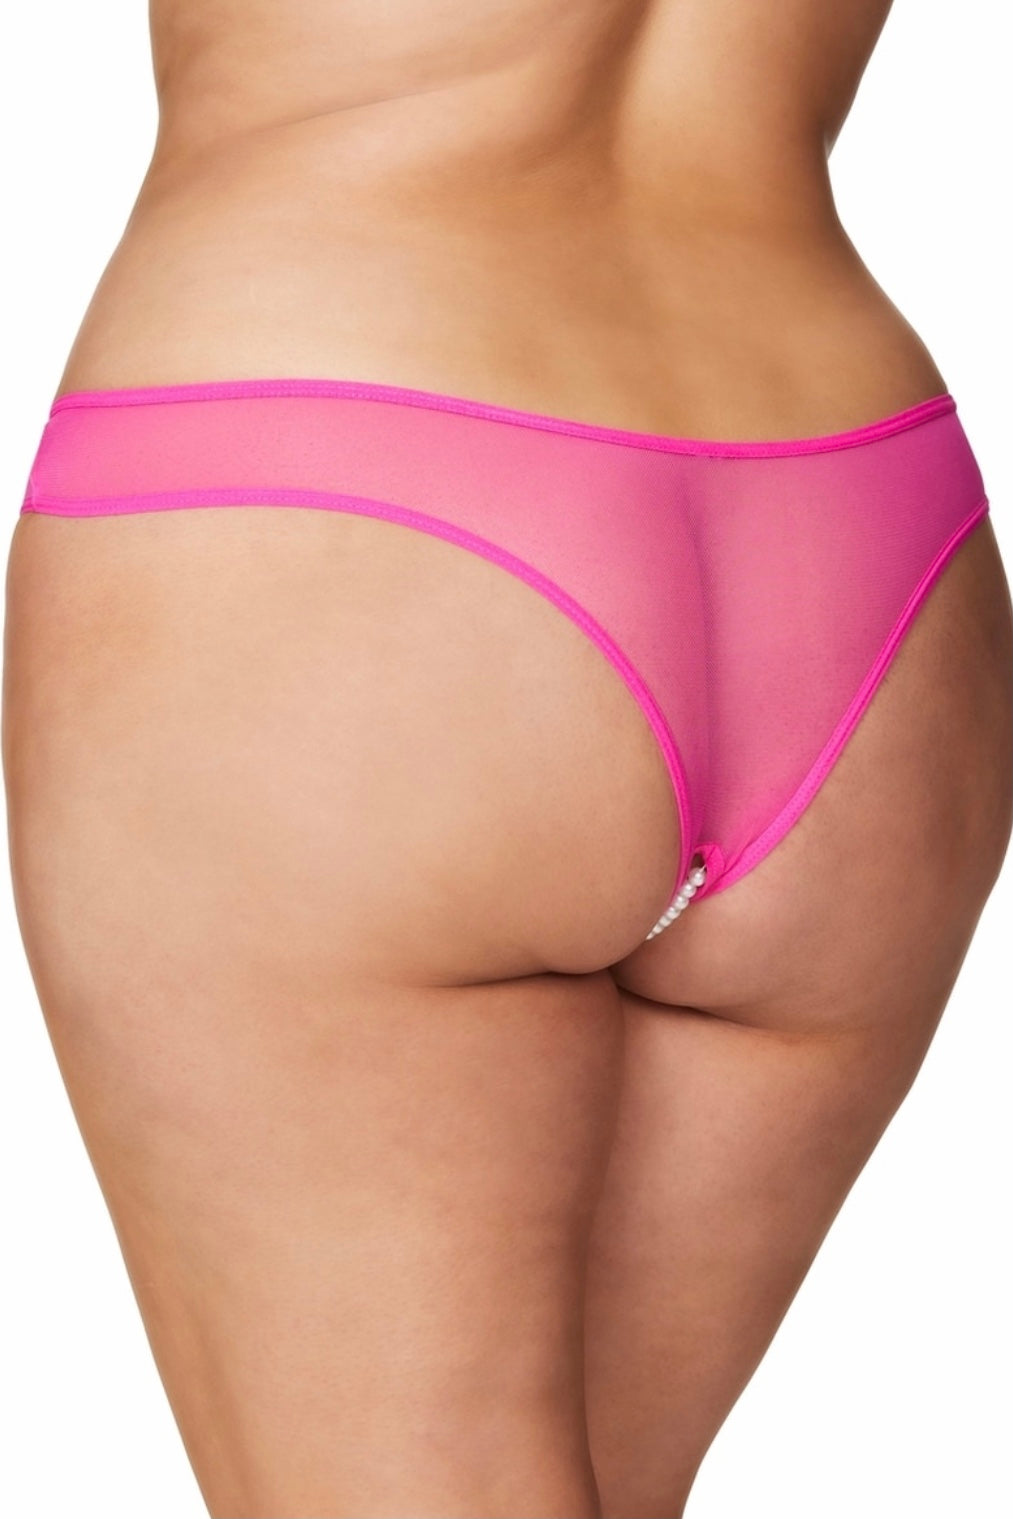 Crotchless Pearl Panty pink - CurvynBeautiful 